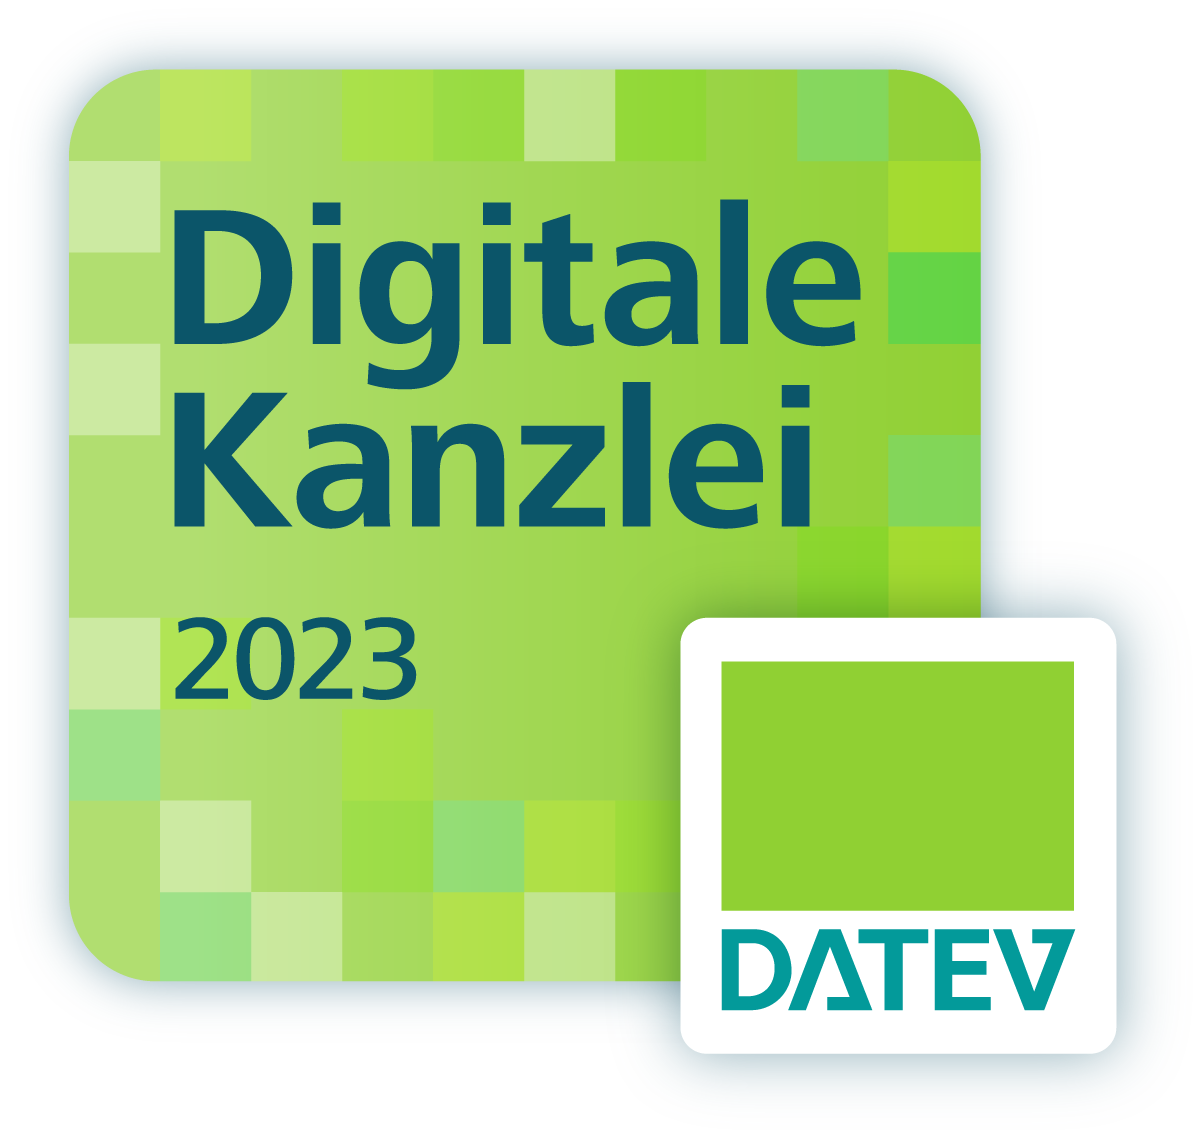 Signet DATEV Digitale Kanzlei 2022